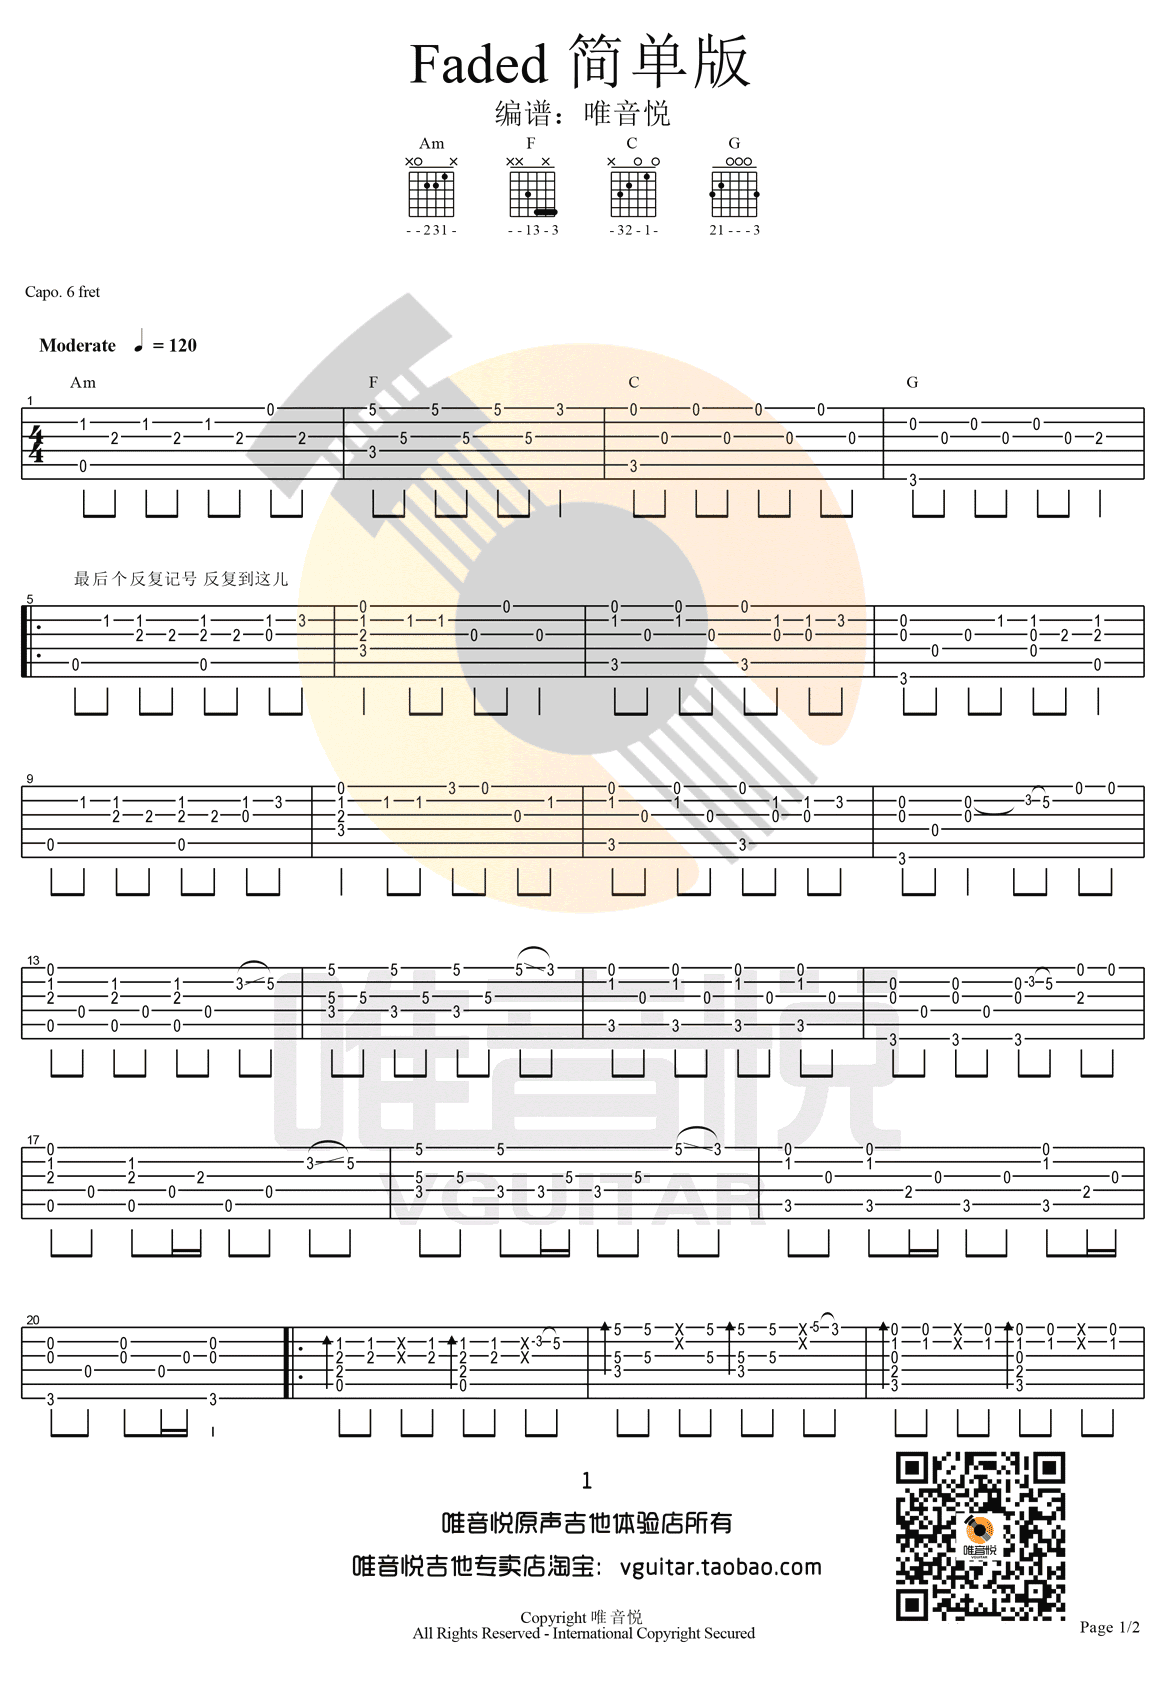 Faded吉他谱,原版Alan Walker歌曲,简单指弹曲谱,高清六线乐谱